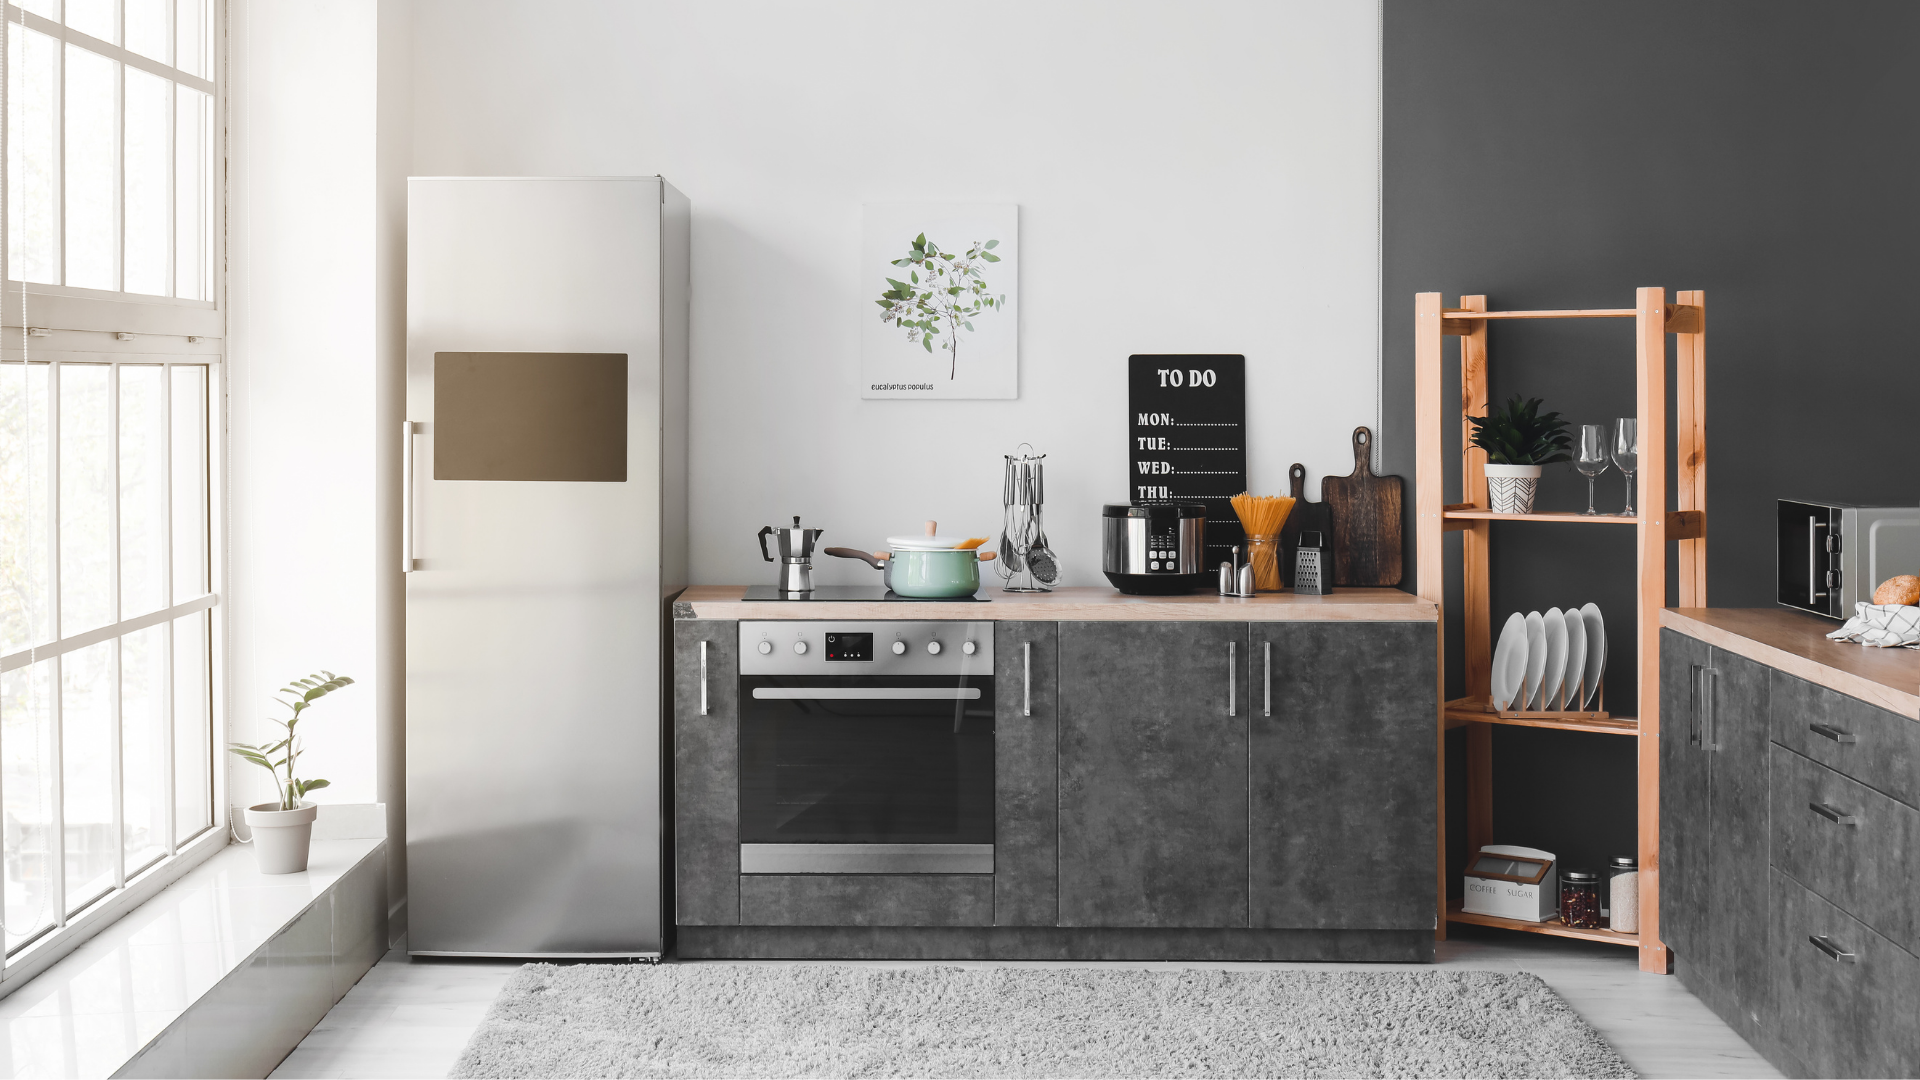 Modern grey kitchen with natural lighting